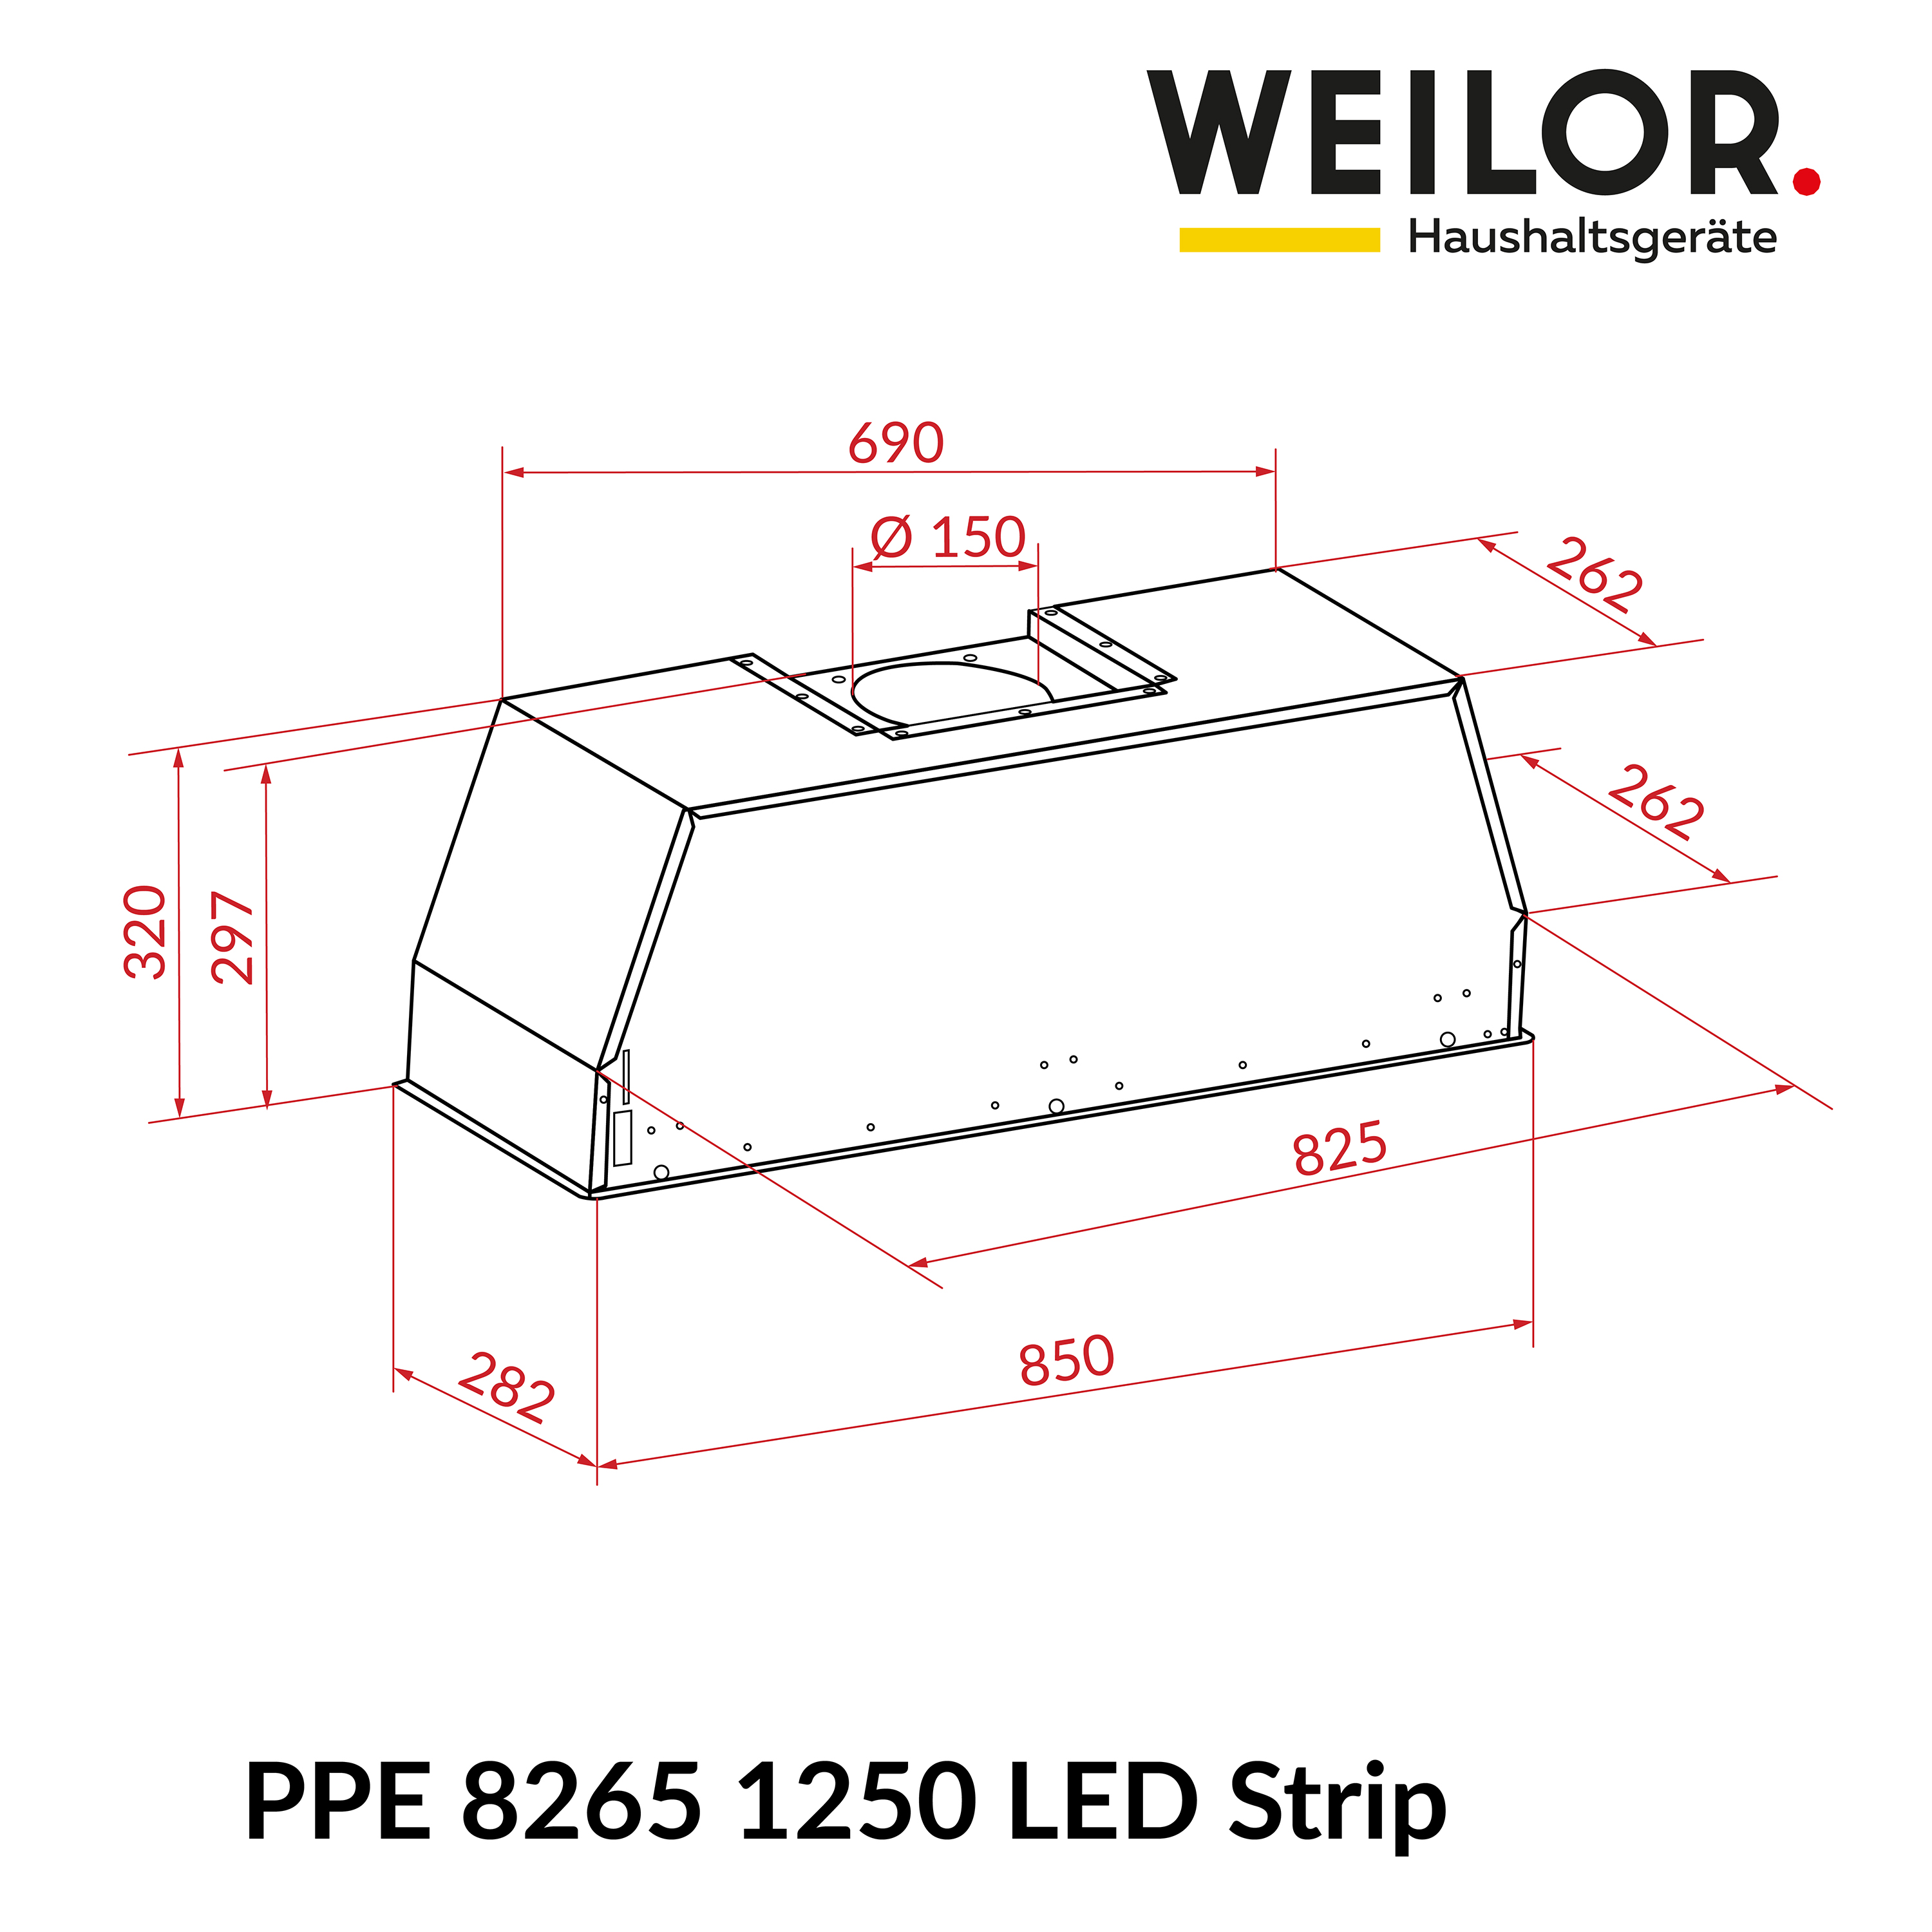 Weilor PPE 8265 SS 1250 LED Strip Габаритные размеры